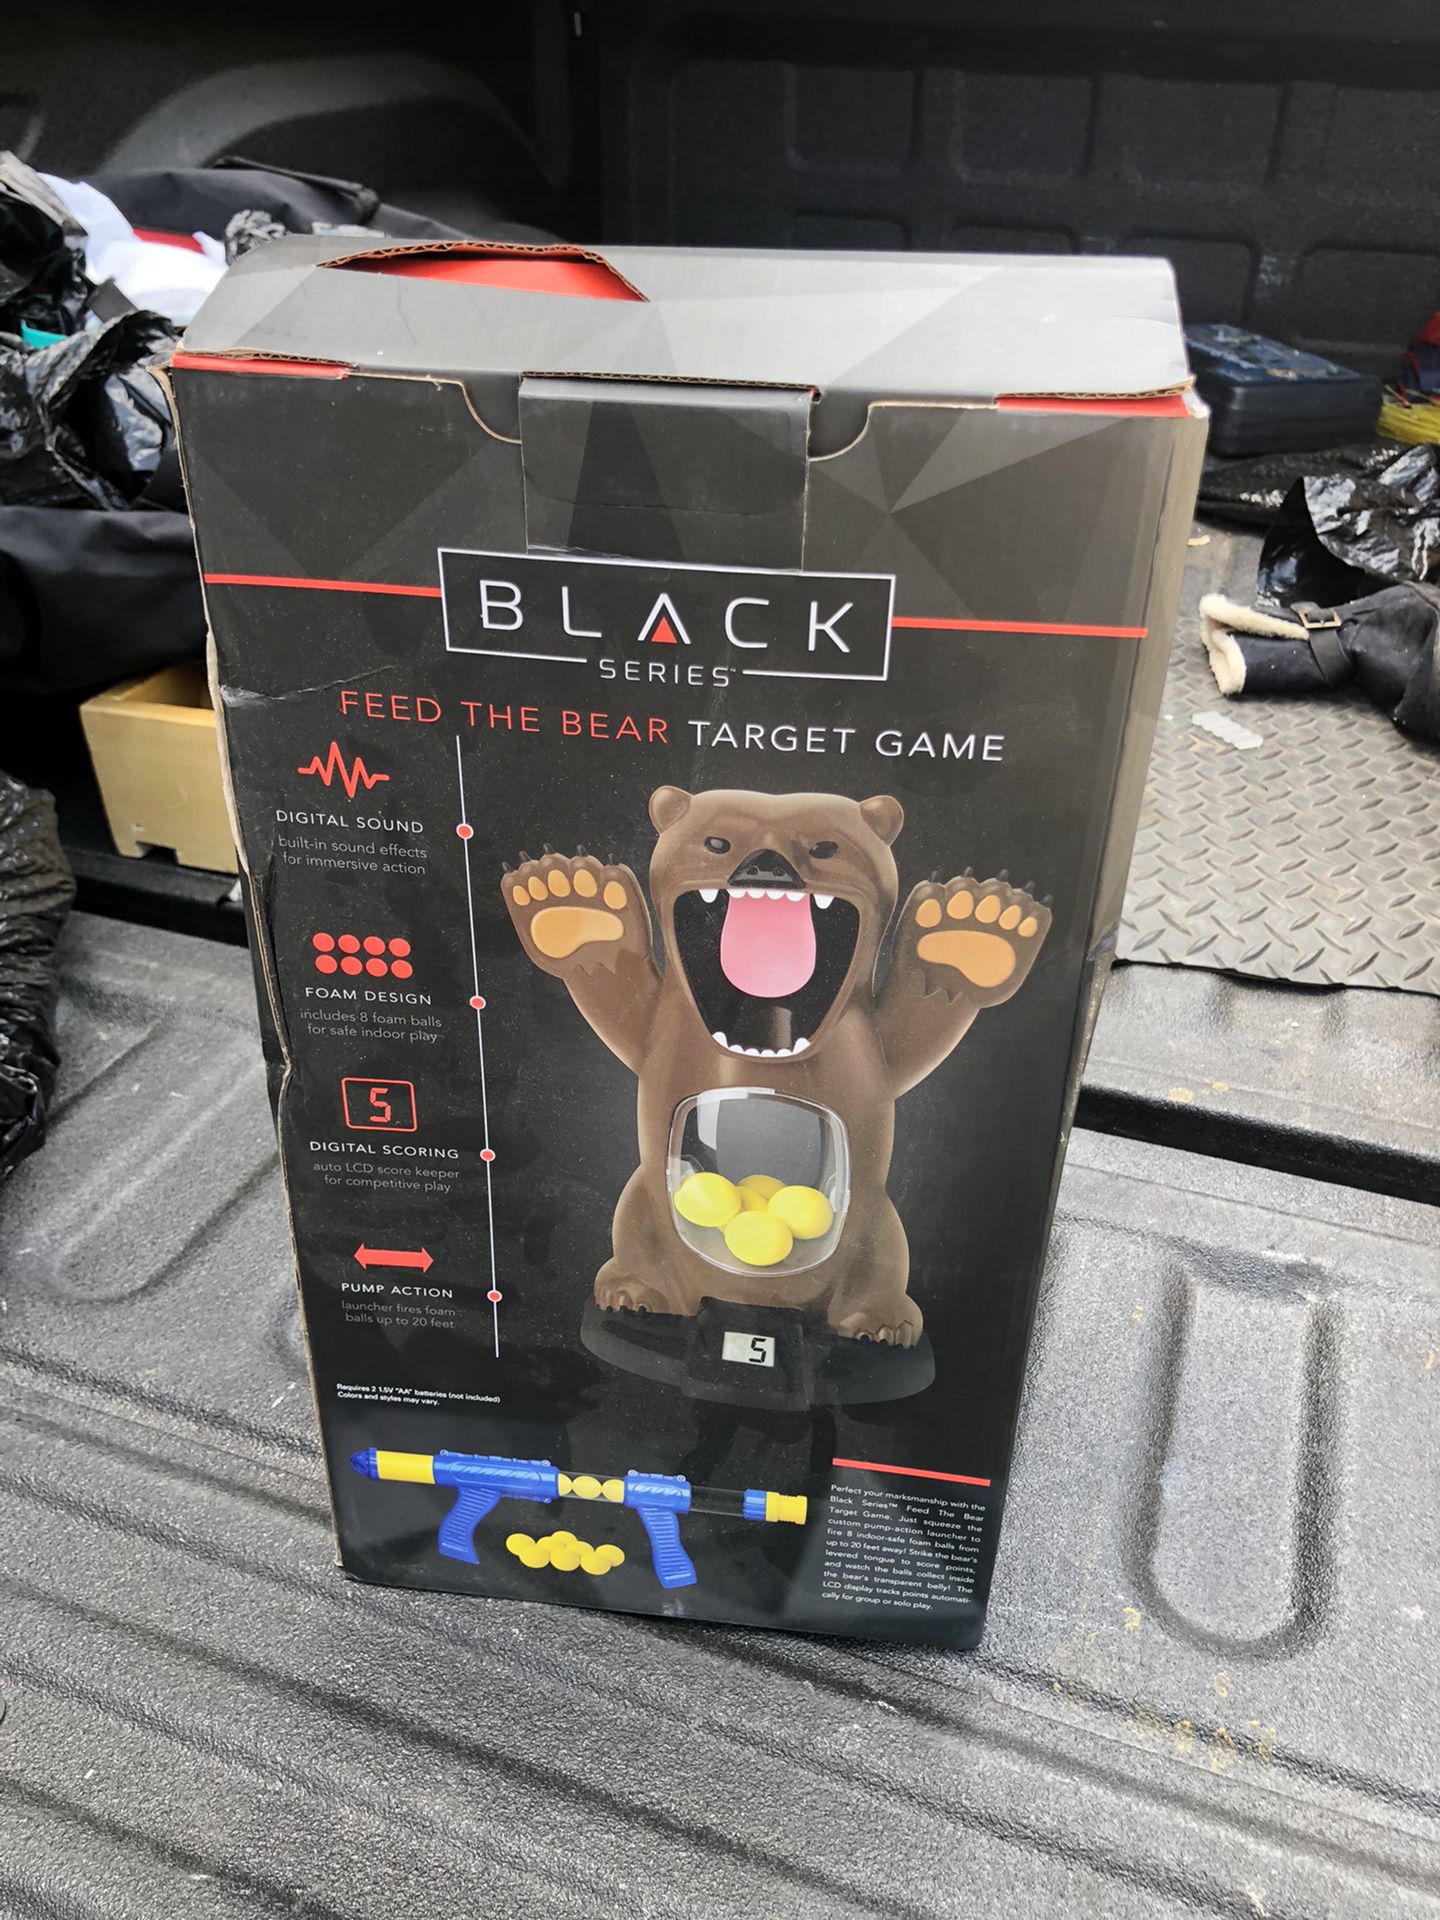 Black Series, Feed the Bear Target Game